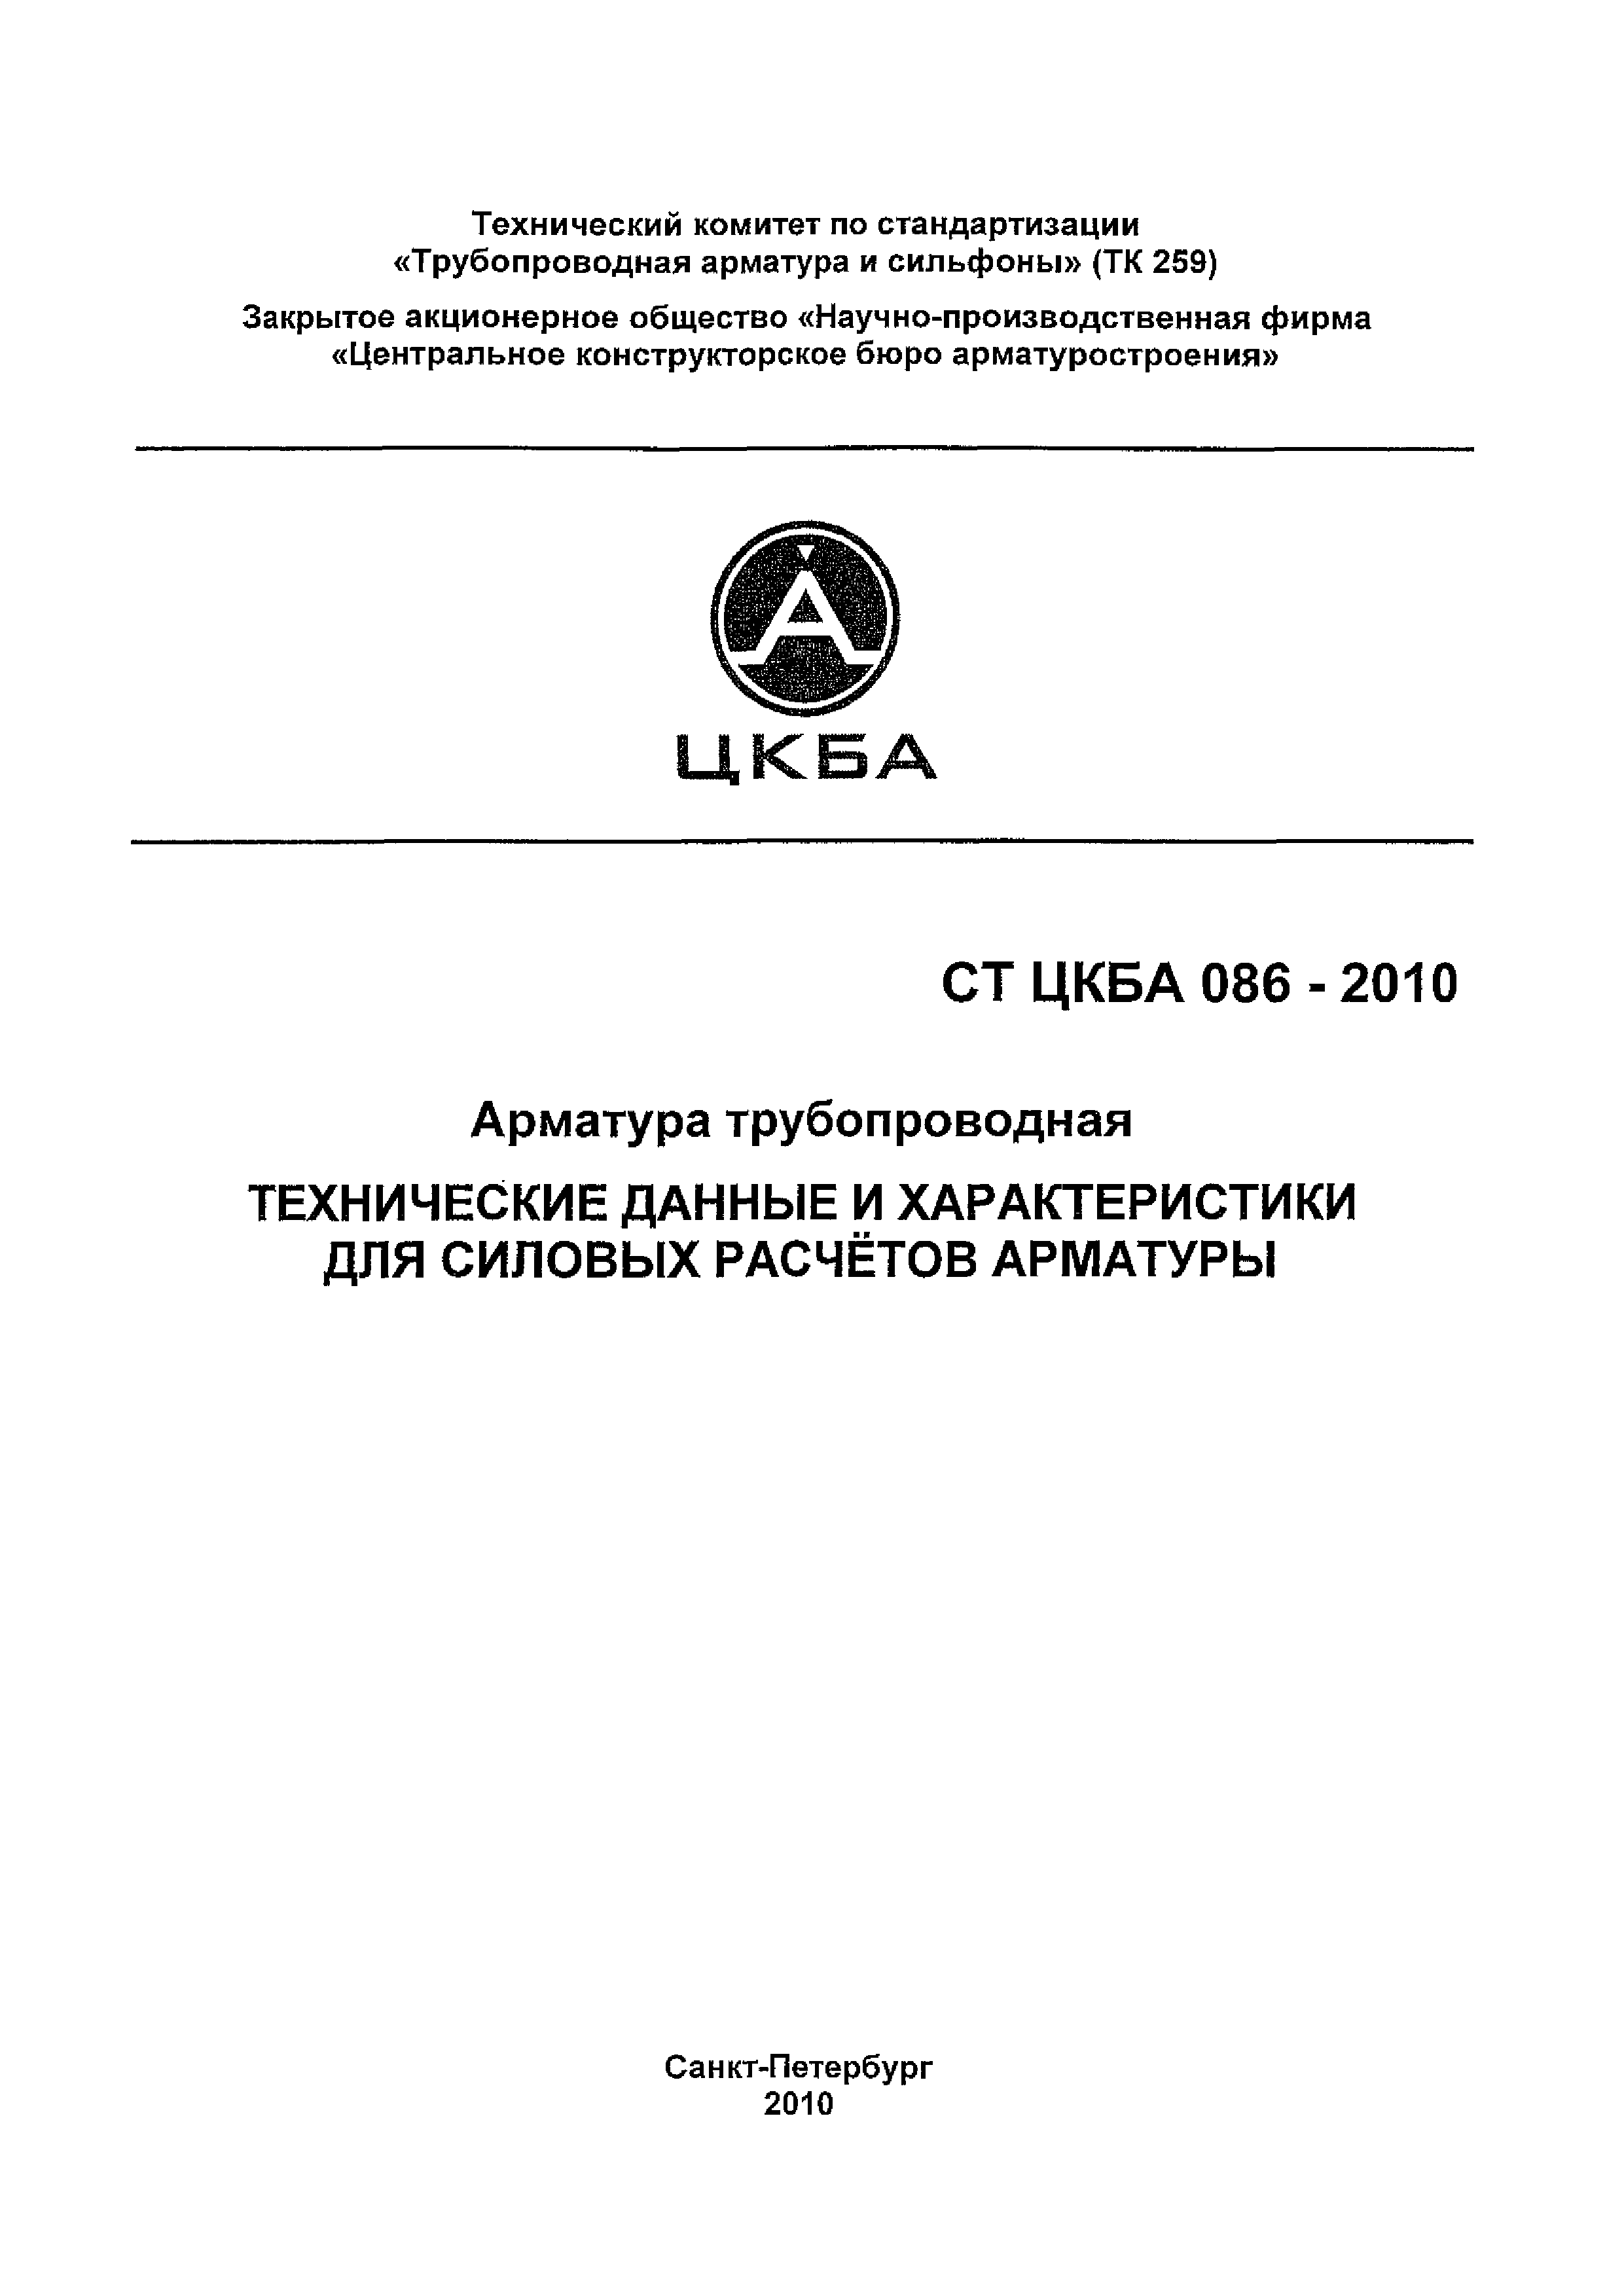 СТ ЦКБА 086-2010